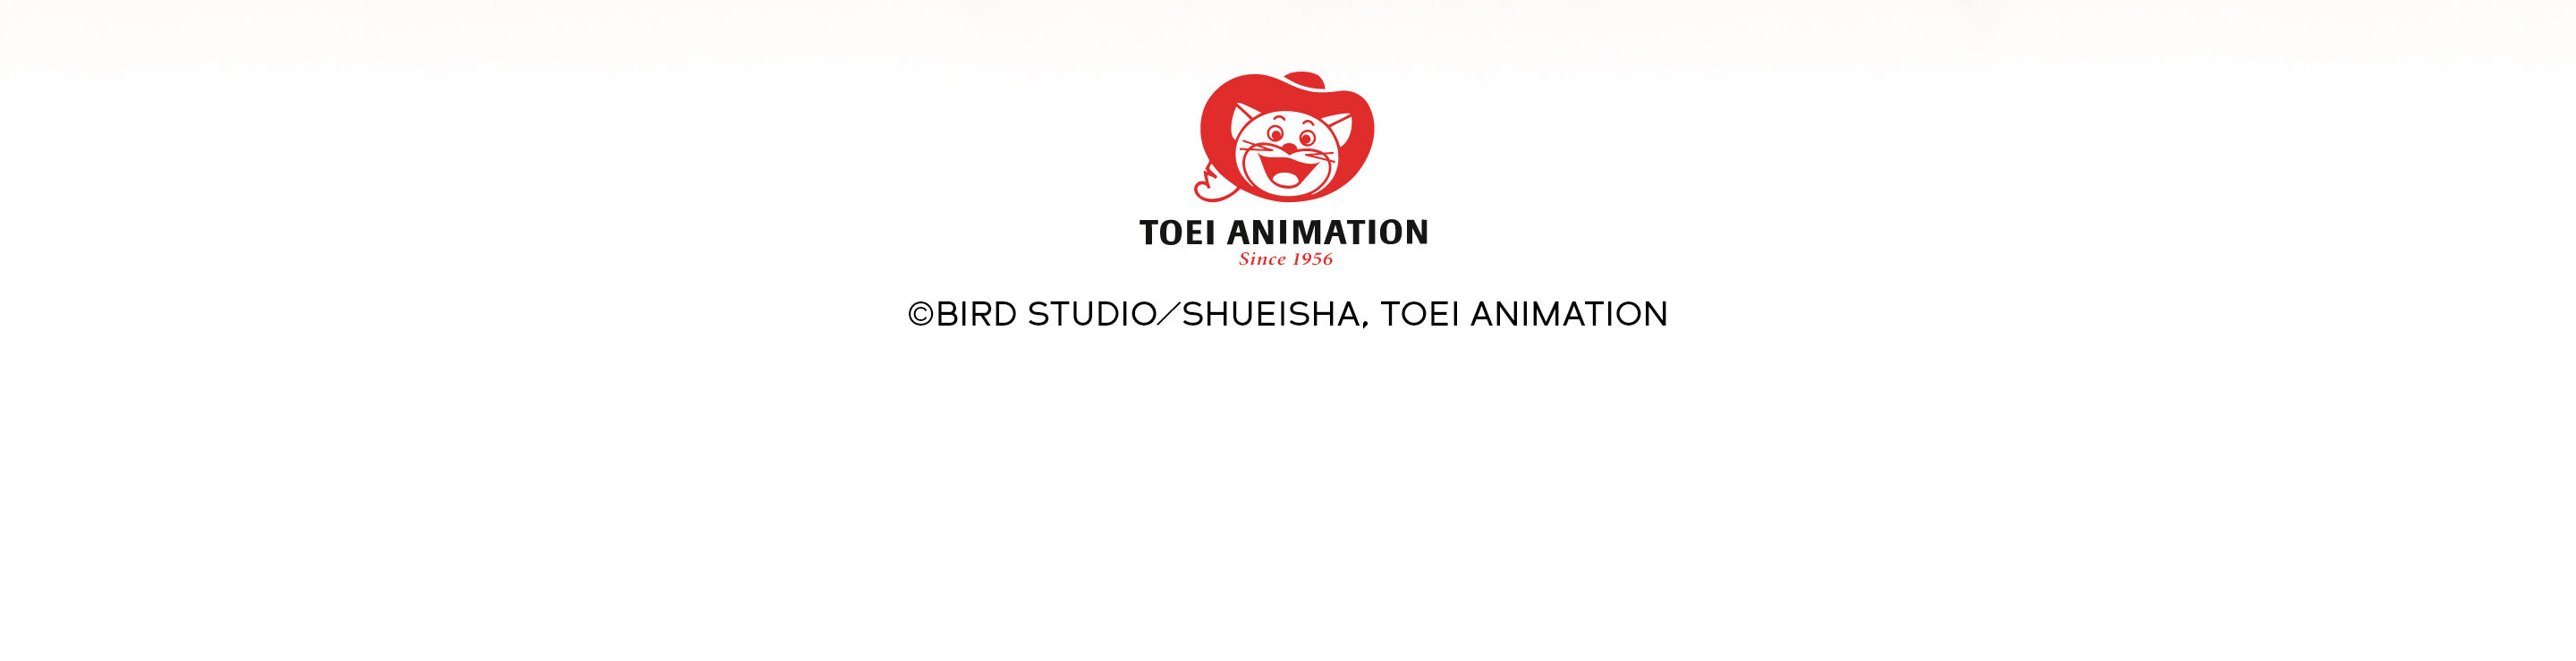 Toei Animation copyright